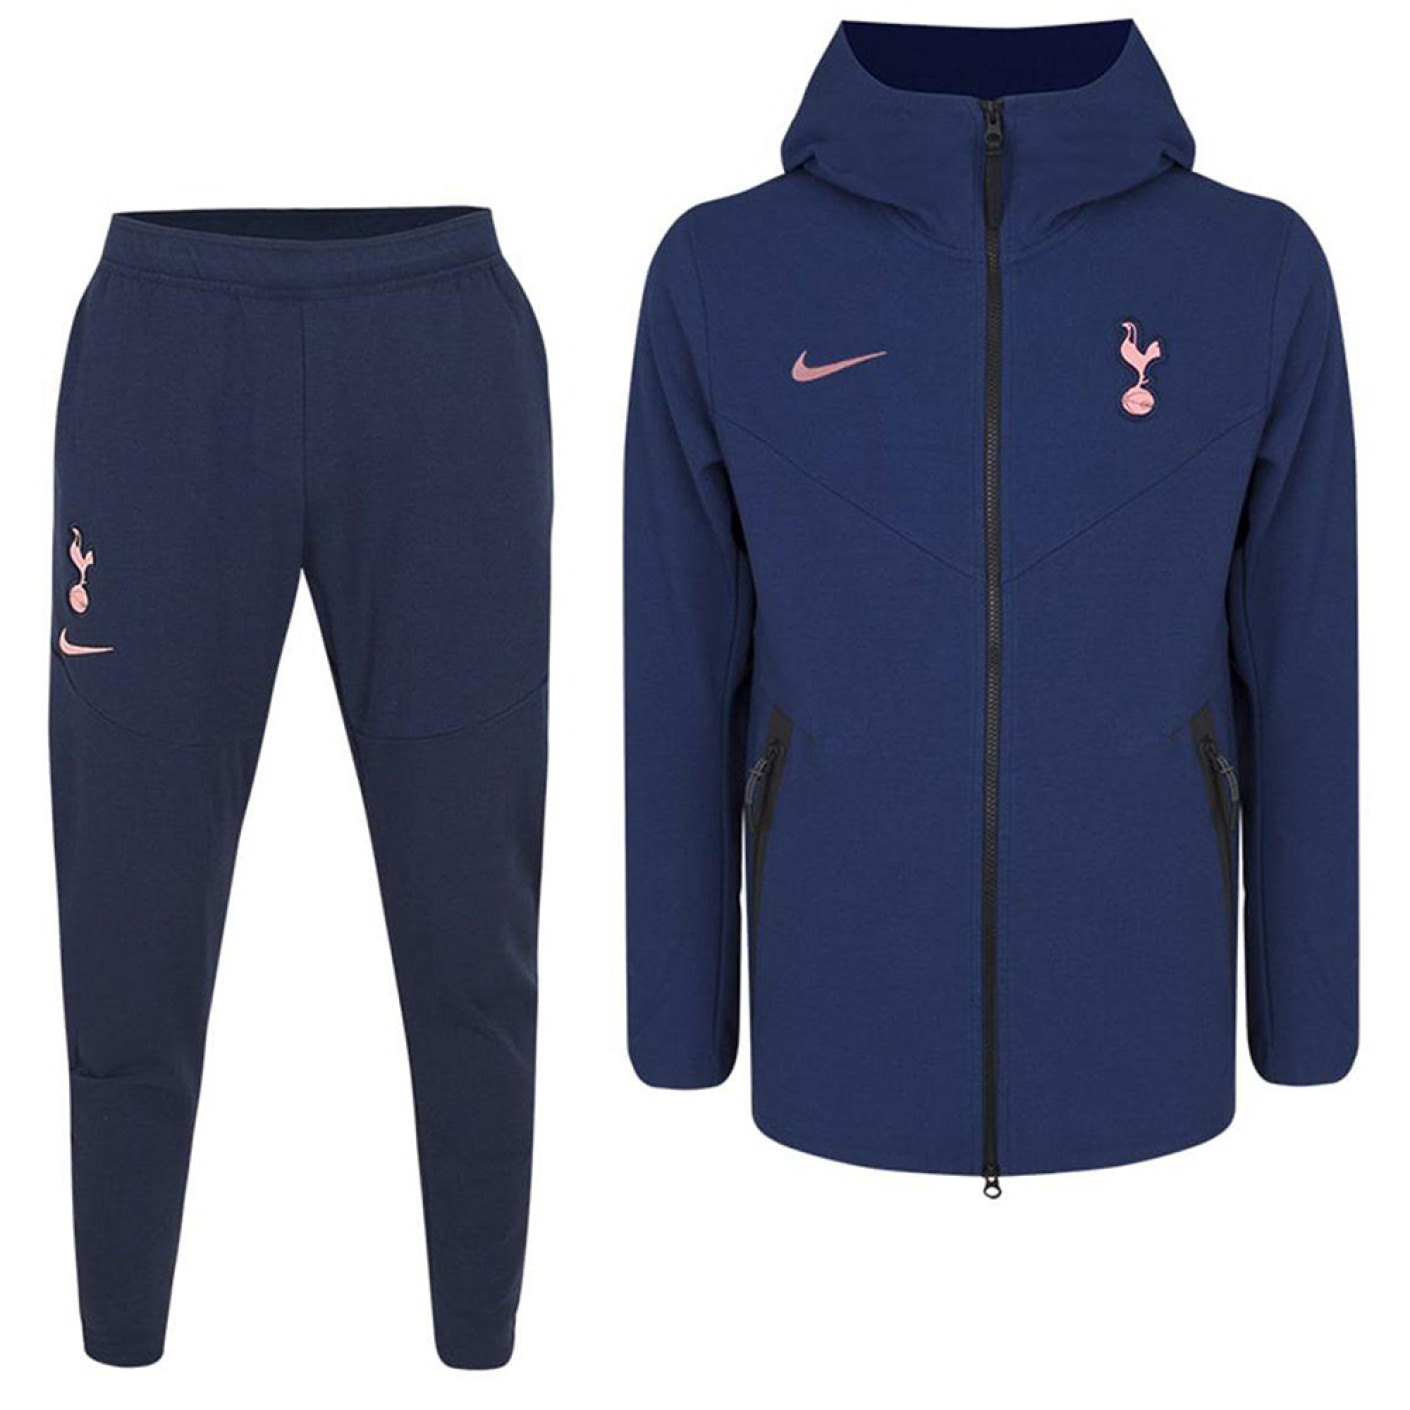 Nike Tottenham Hotspur Tech Fleece Pack Trainingspak 2020-2021 FZ Blauwpaars